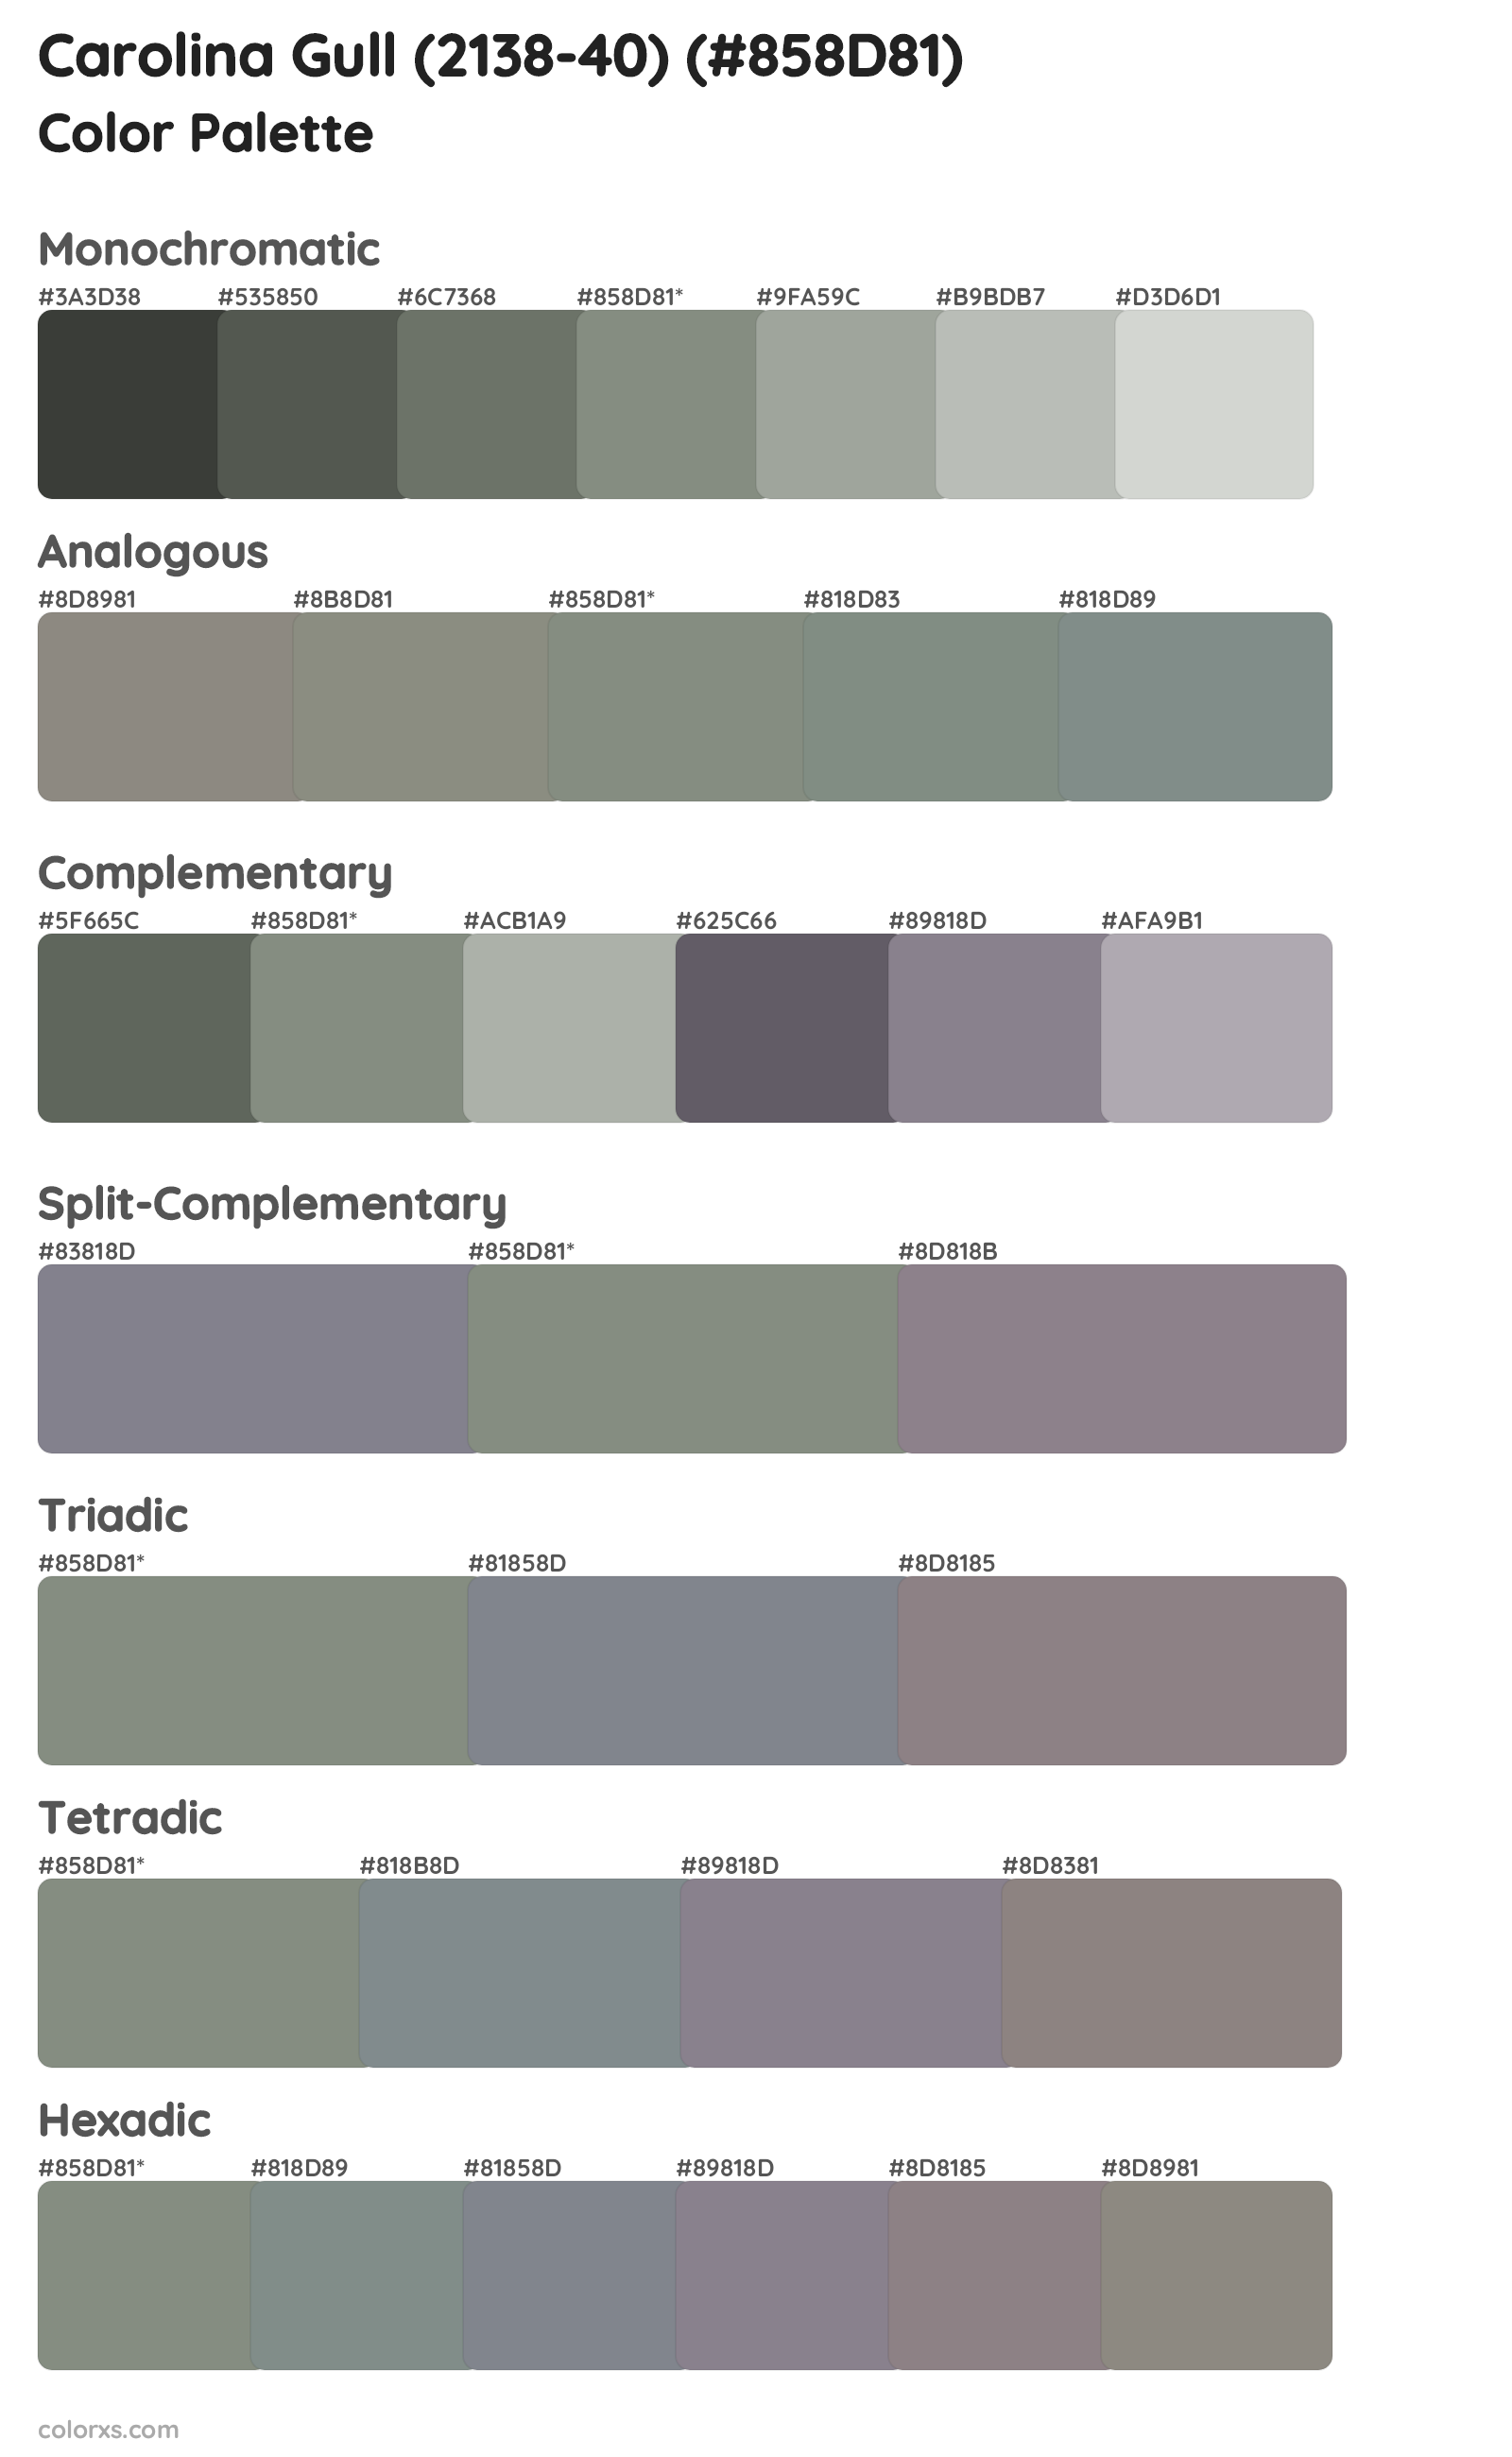 Carolina Gull (2138-40) Color Scheme Palettes